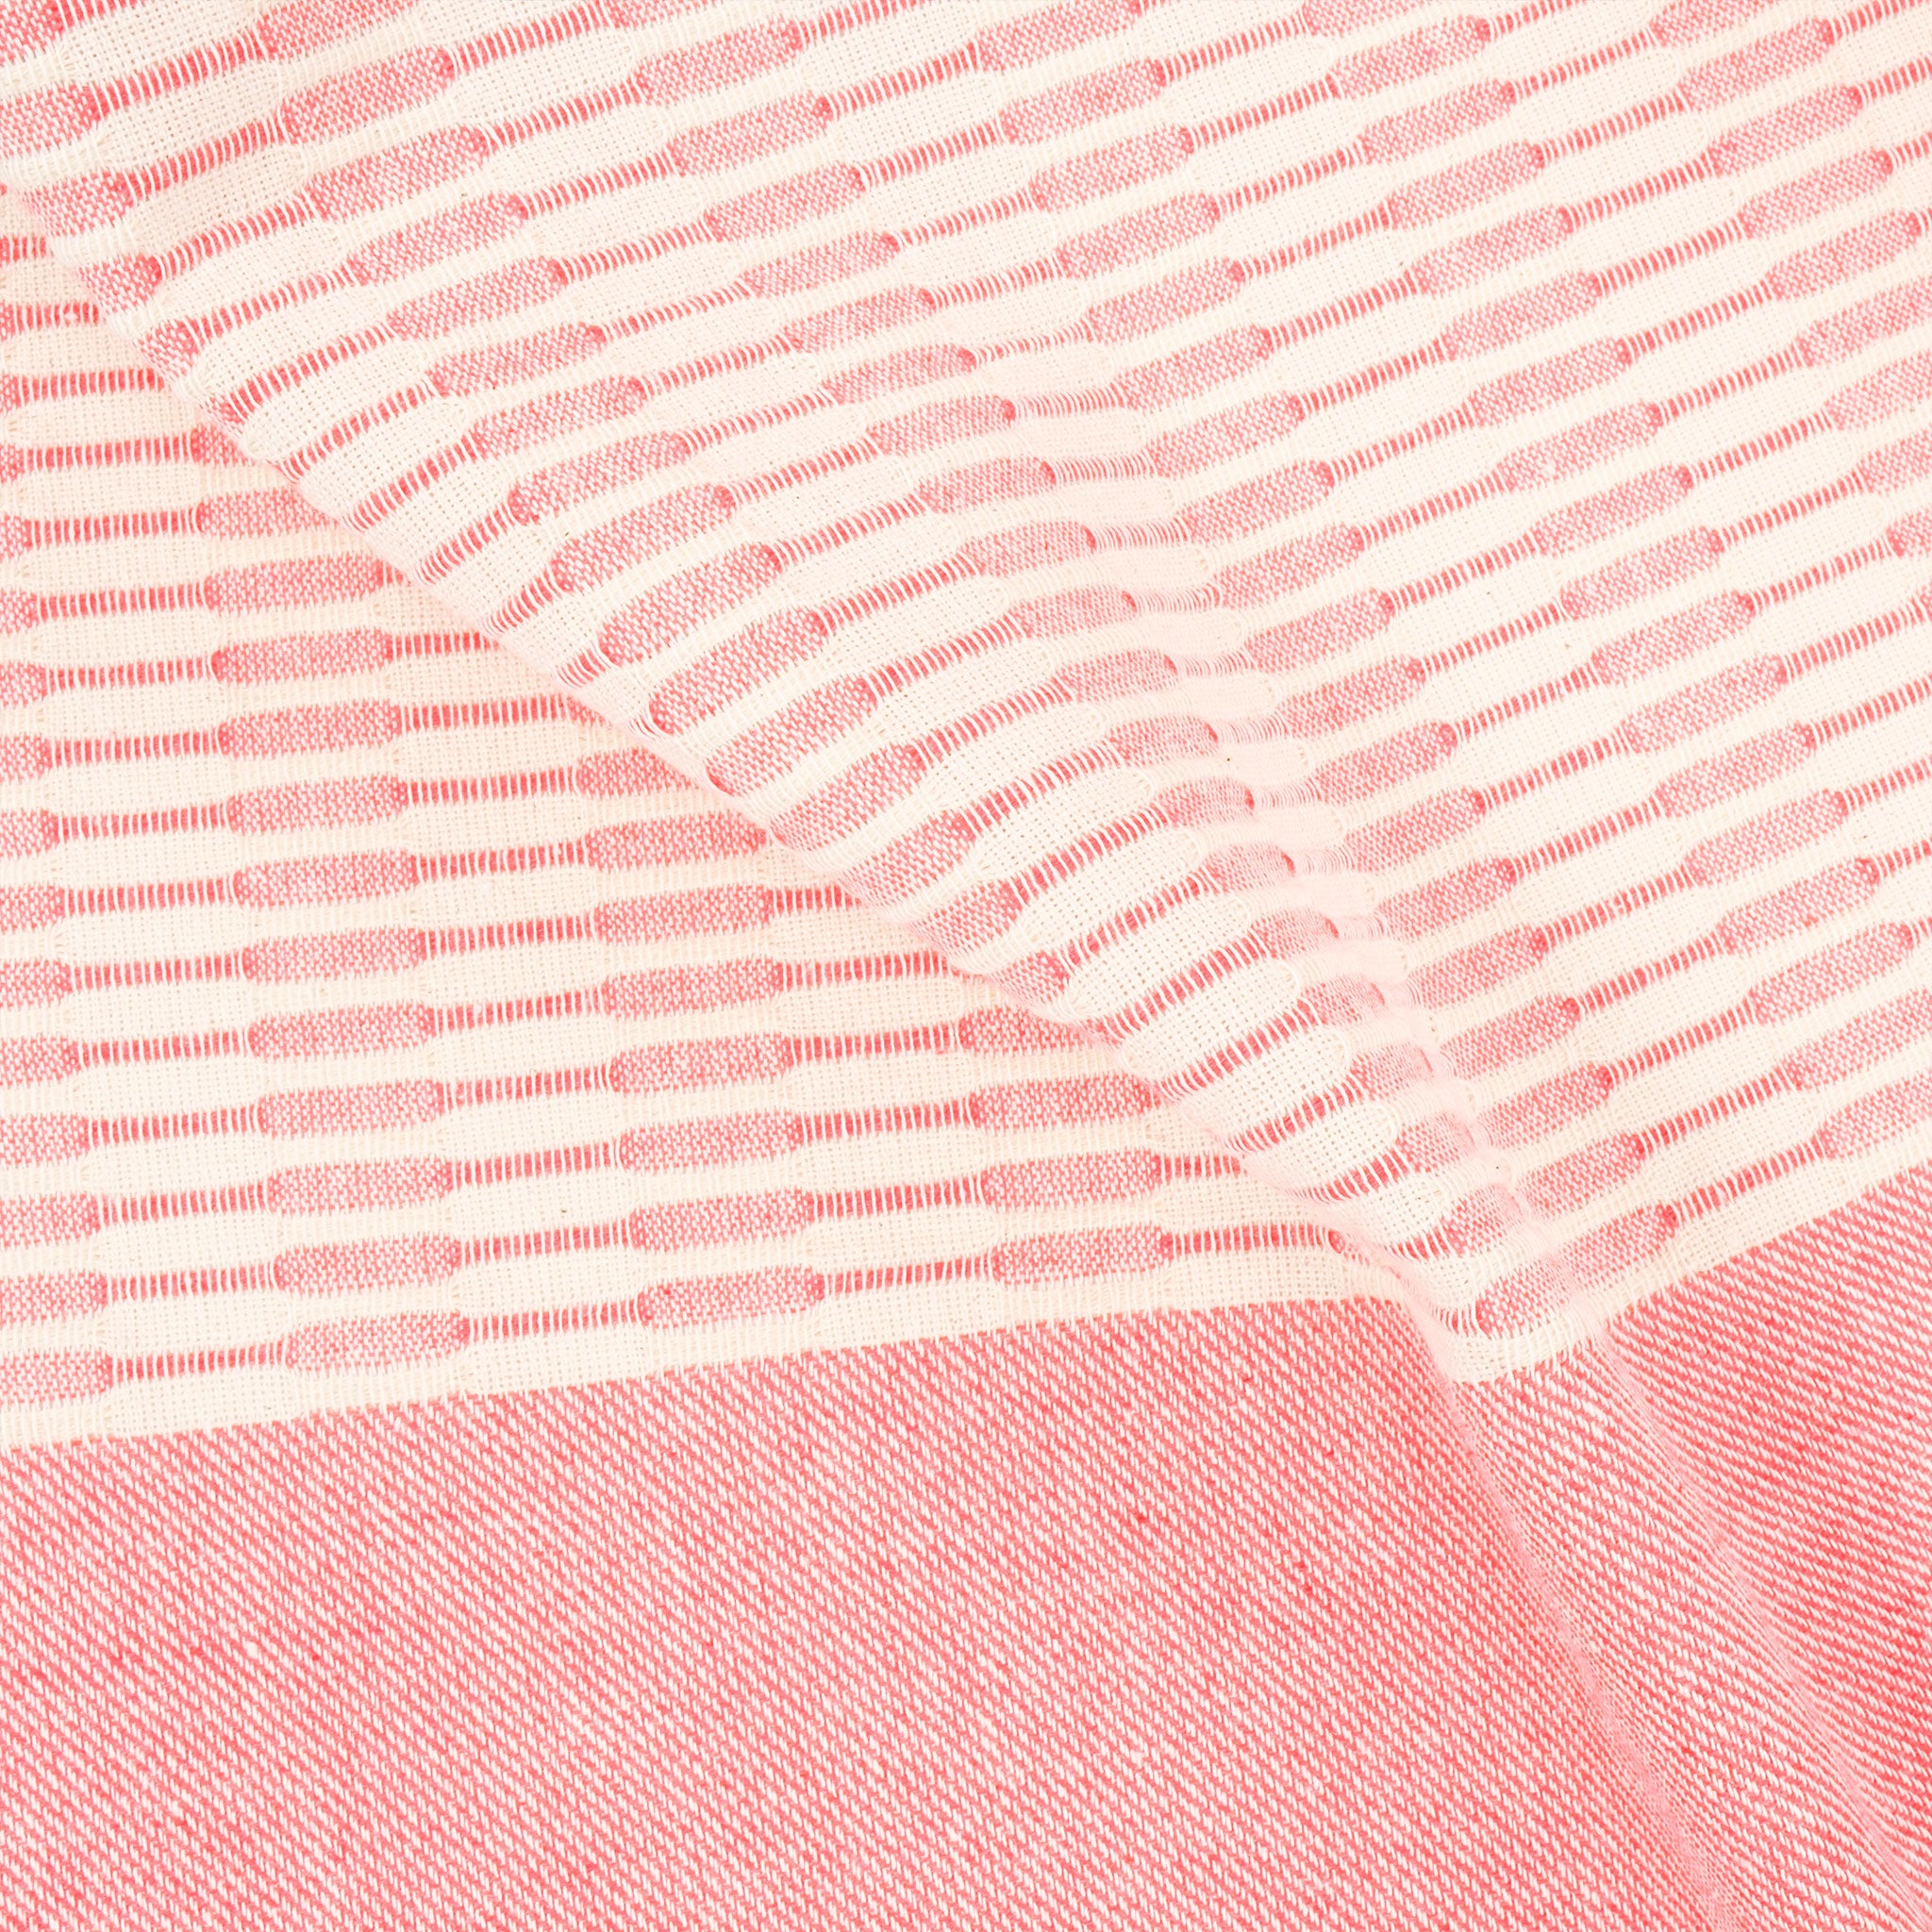 American Soft Linen - 100% Cotton Turkish Peshtemal Towels 40x70 Inches - Coral - 2